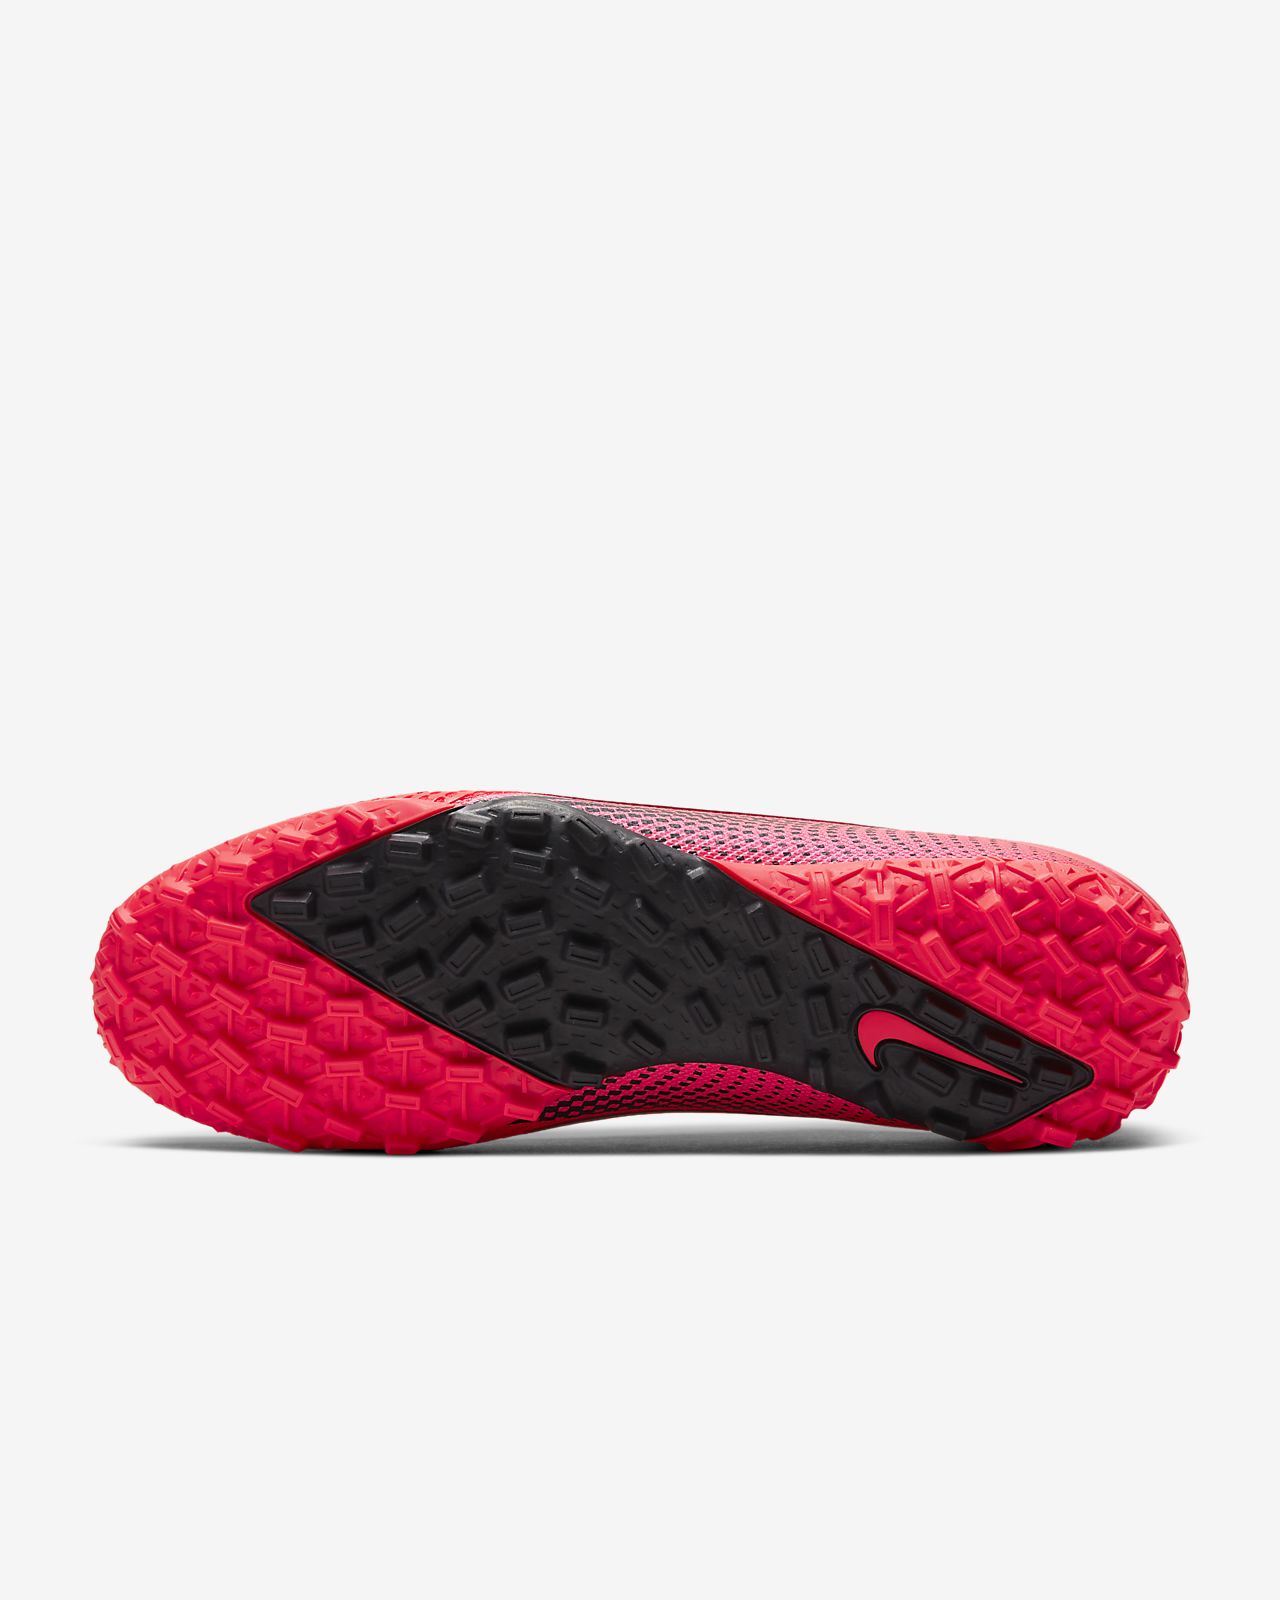 Scarpe Calcetto Nike Mercurial Vapor 13 Academy TF. EBay